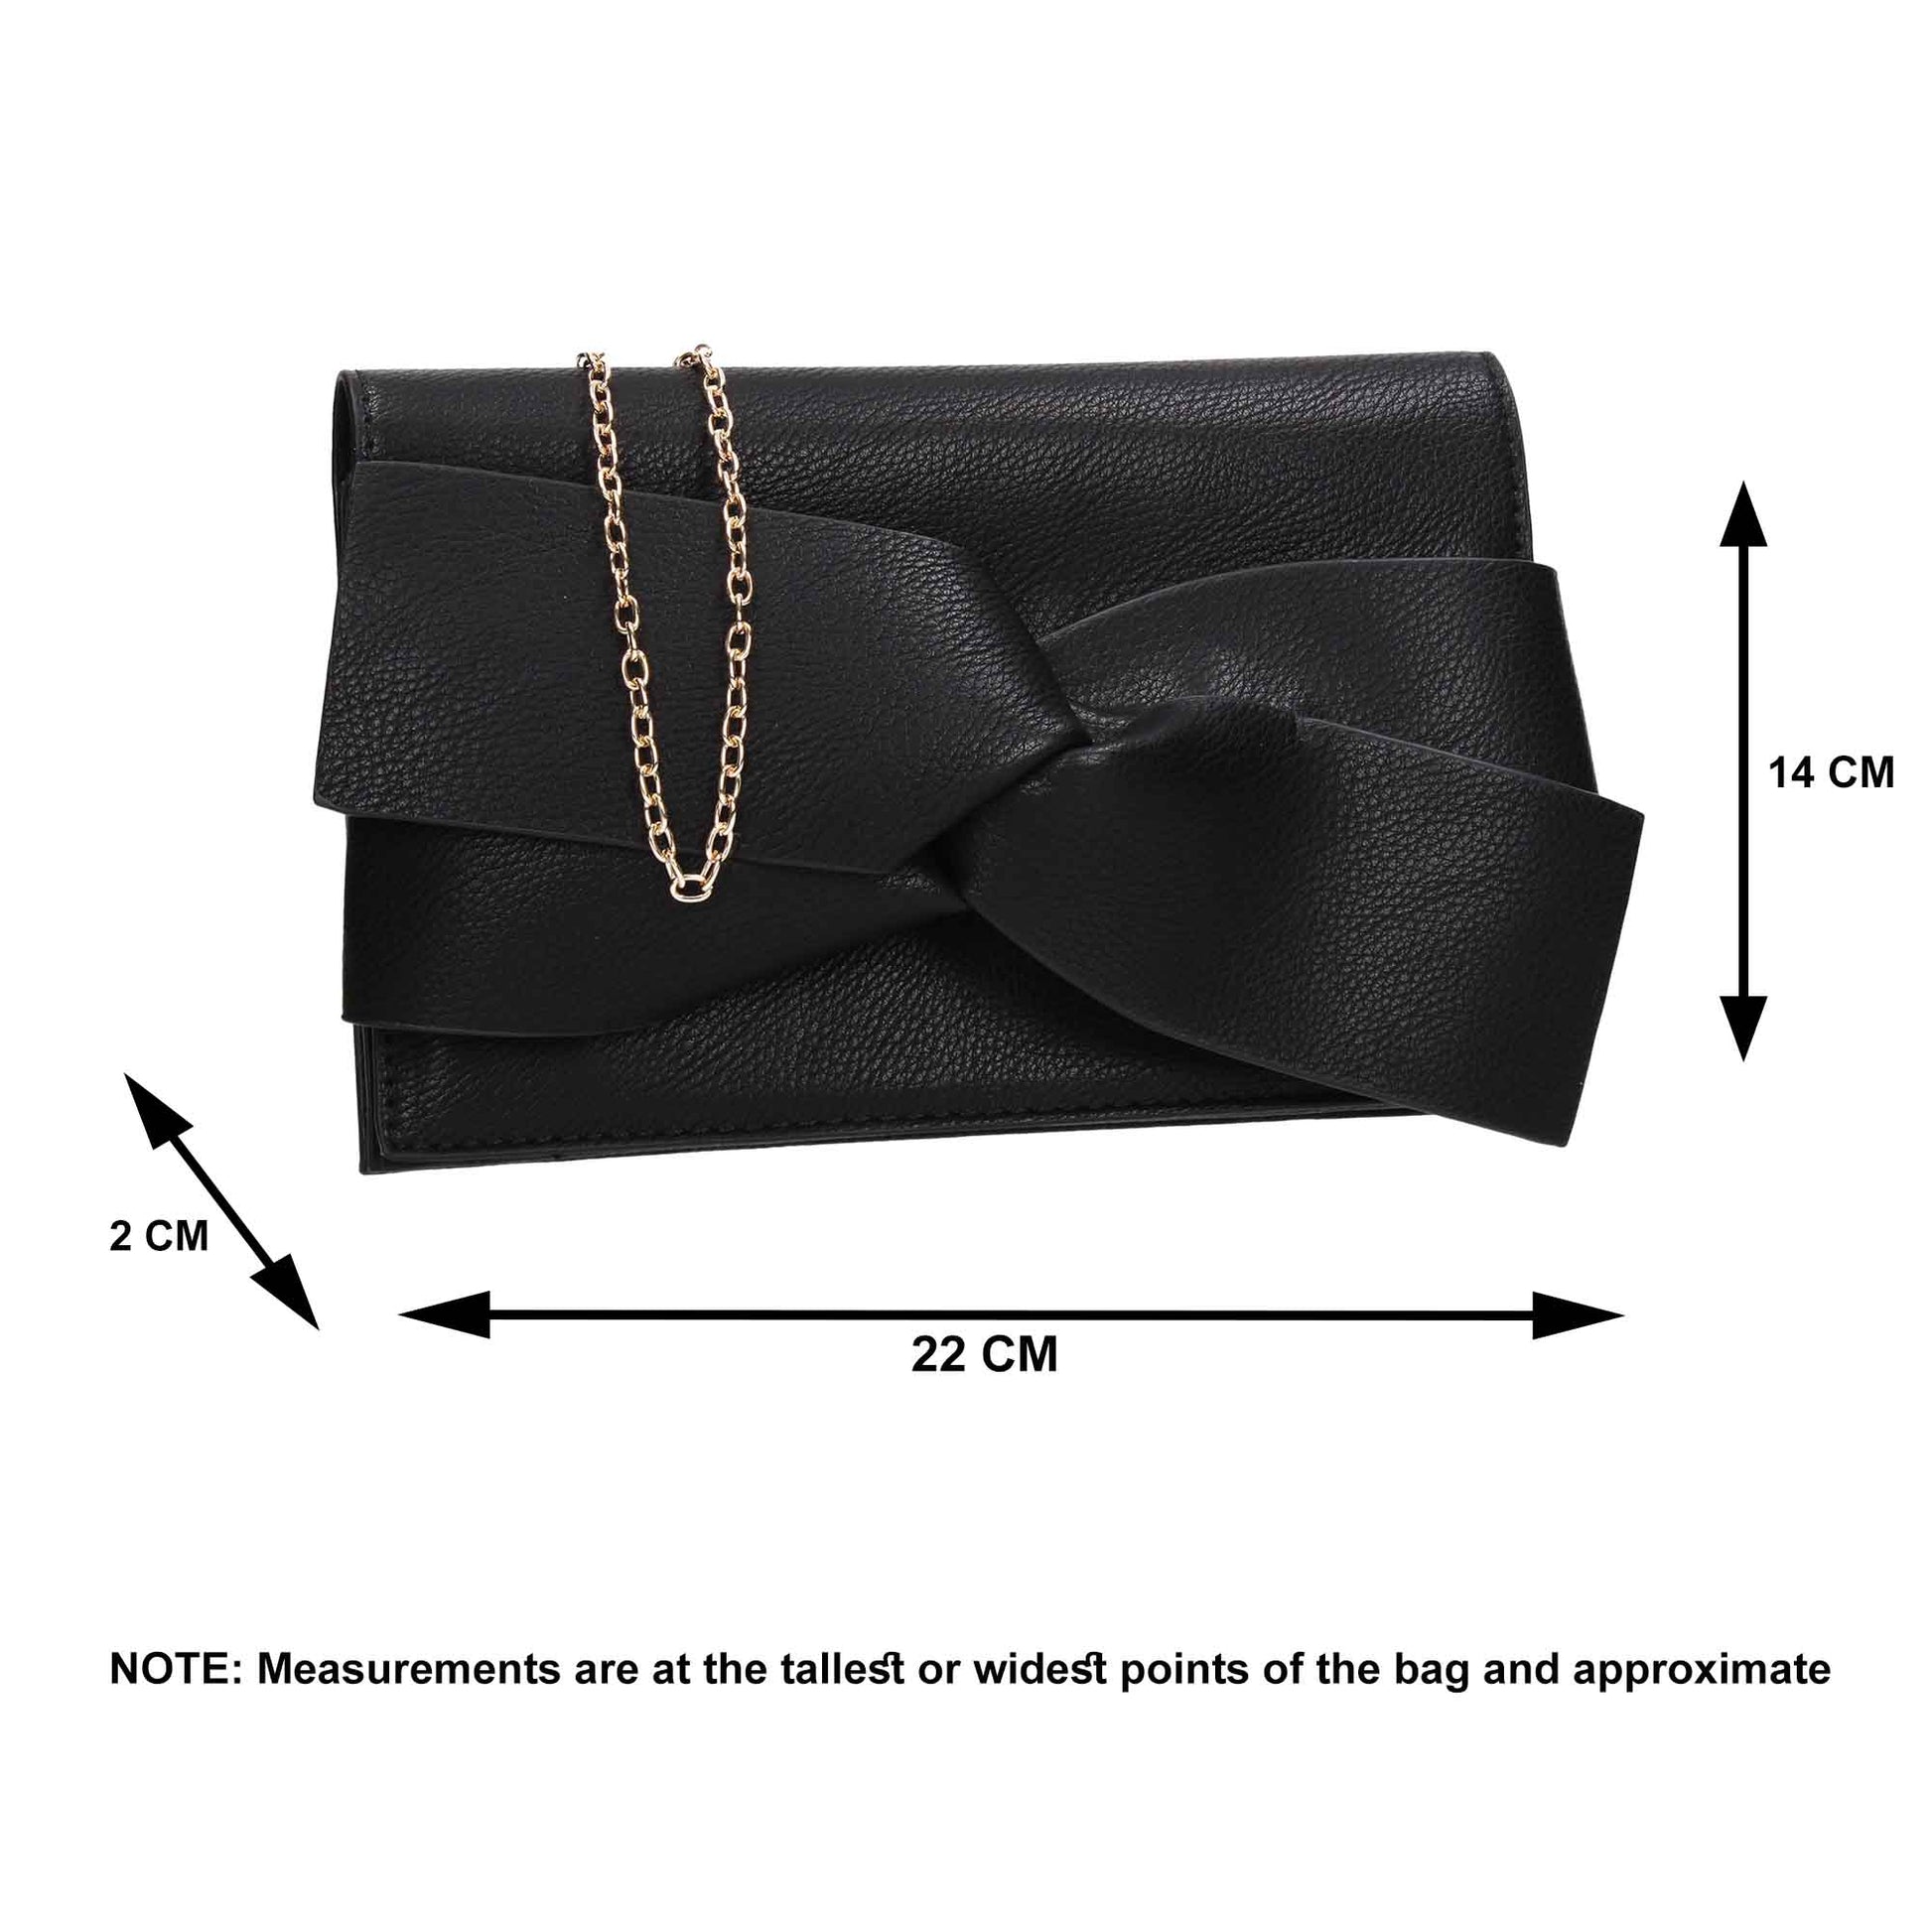 SWANKYSWANS Kira Bow Detail Clutch Bag Black Cute Cheap Clutch Bag For Weddings School and Work